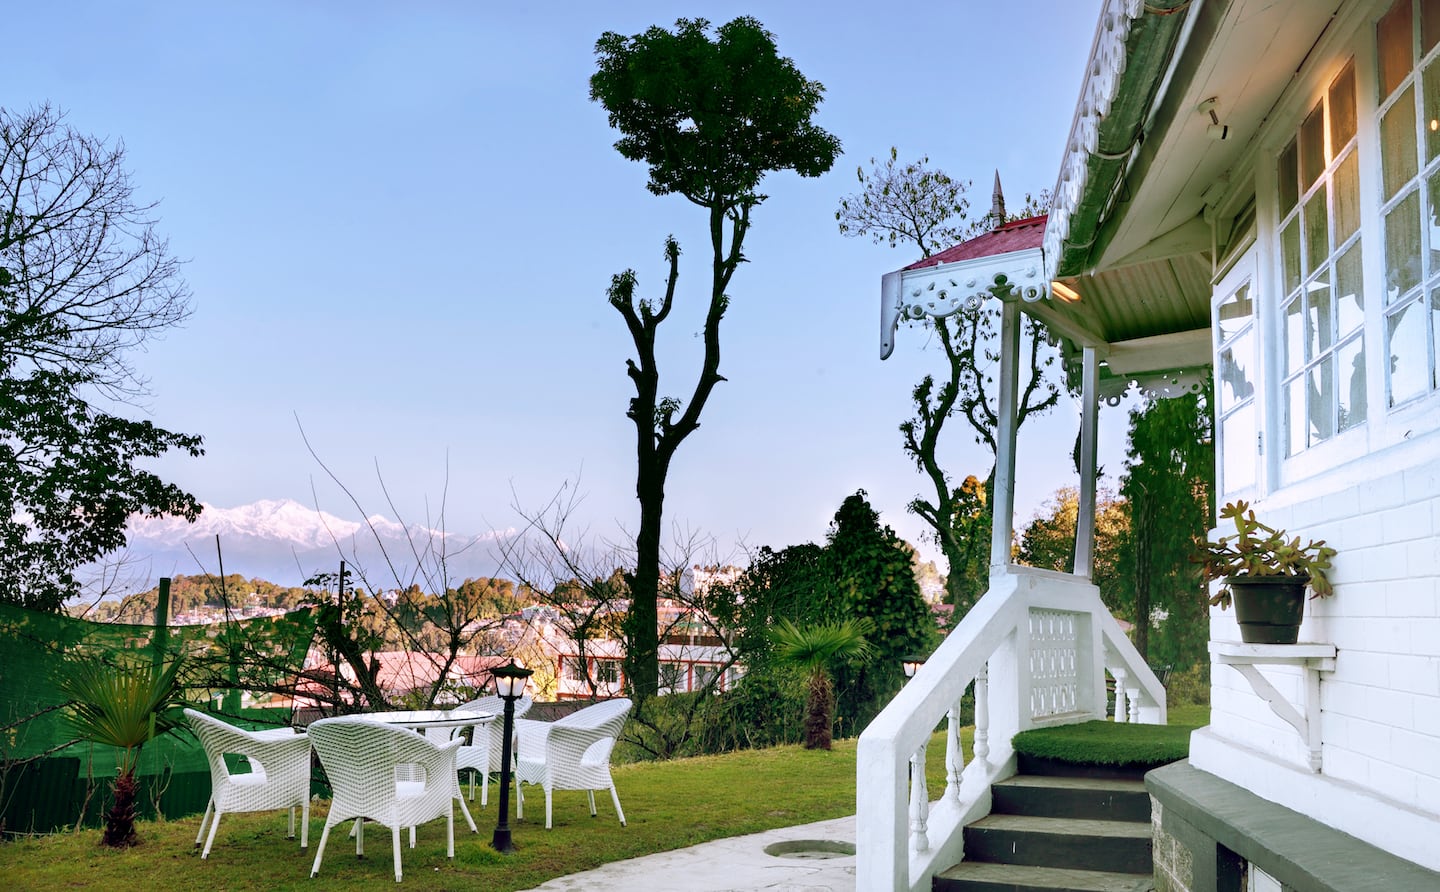 Summit Swiss Heritage Hotel and Spa best hotels in Darjeeling 5 star resorts